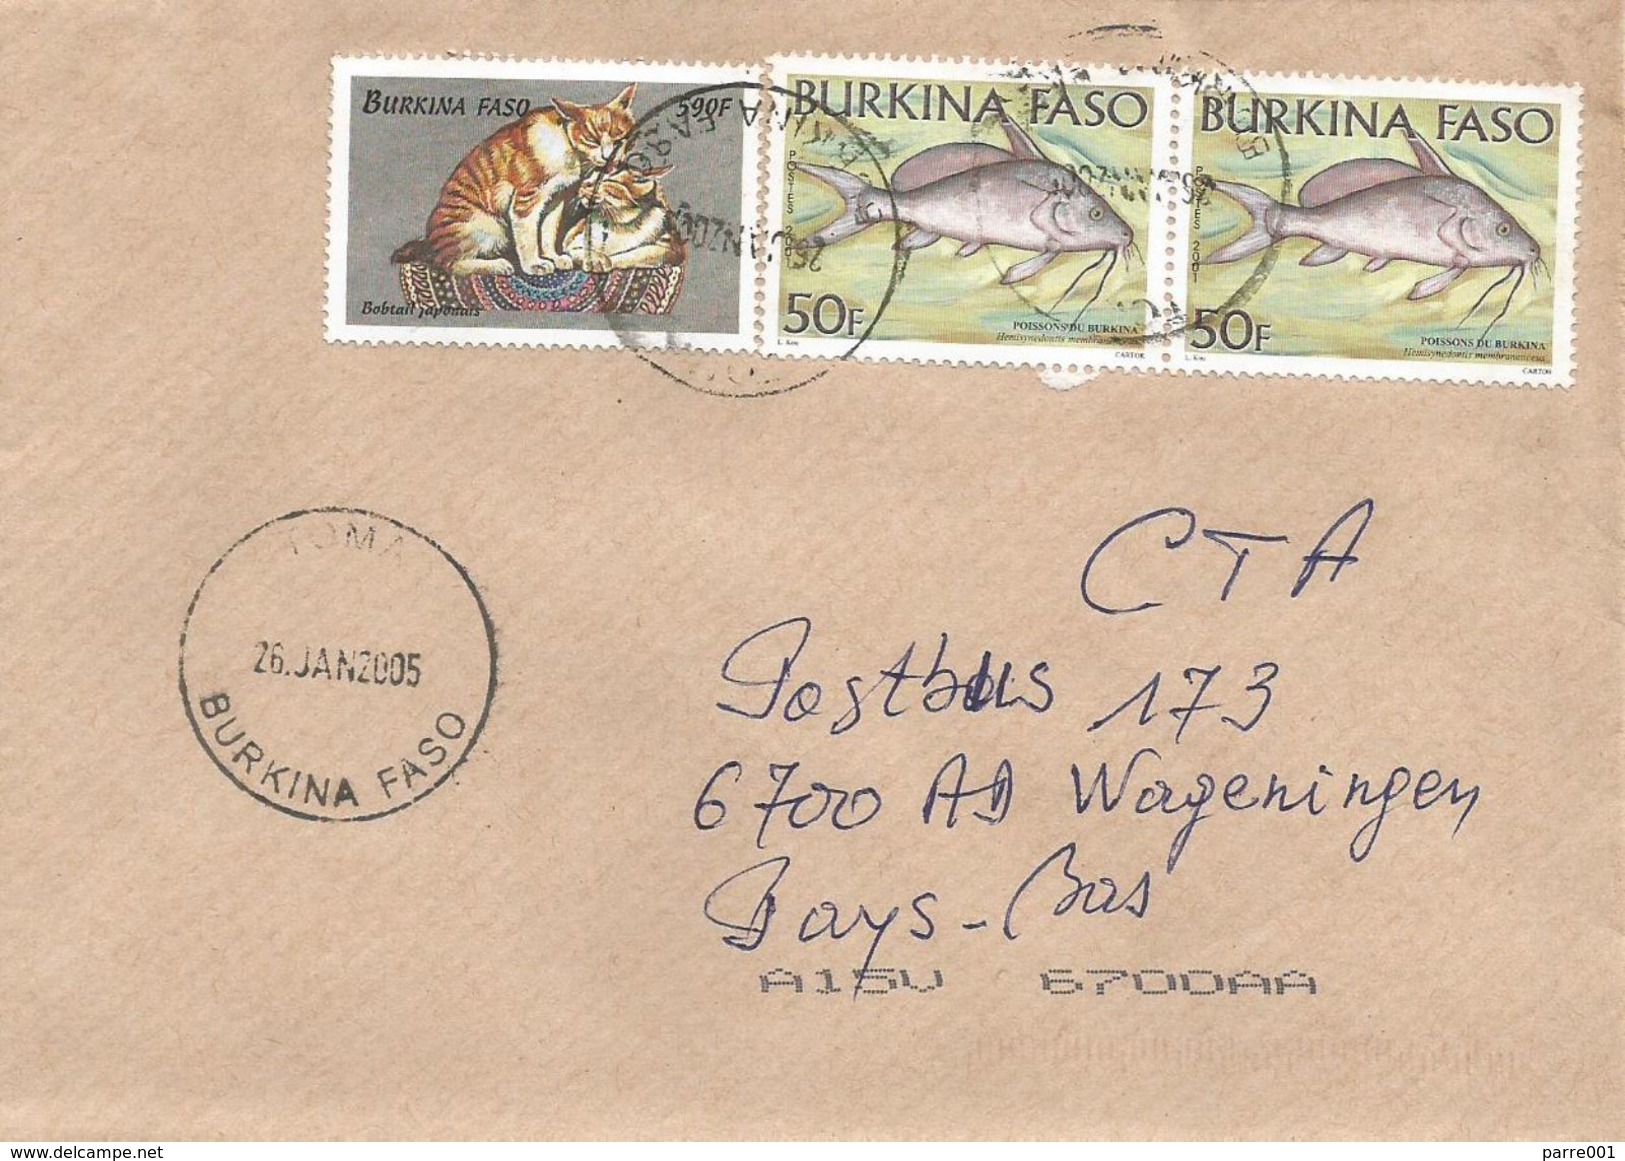 Burkina Faso 2005 Toma Japanese Bobtail Cat Freshwater Fish Cover - Burkina Faso (1984-...)